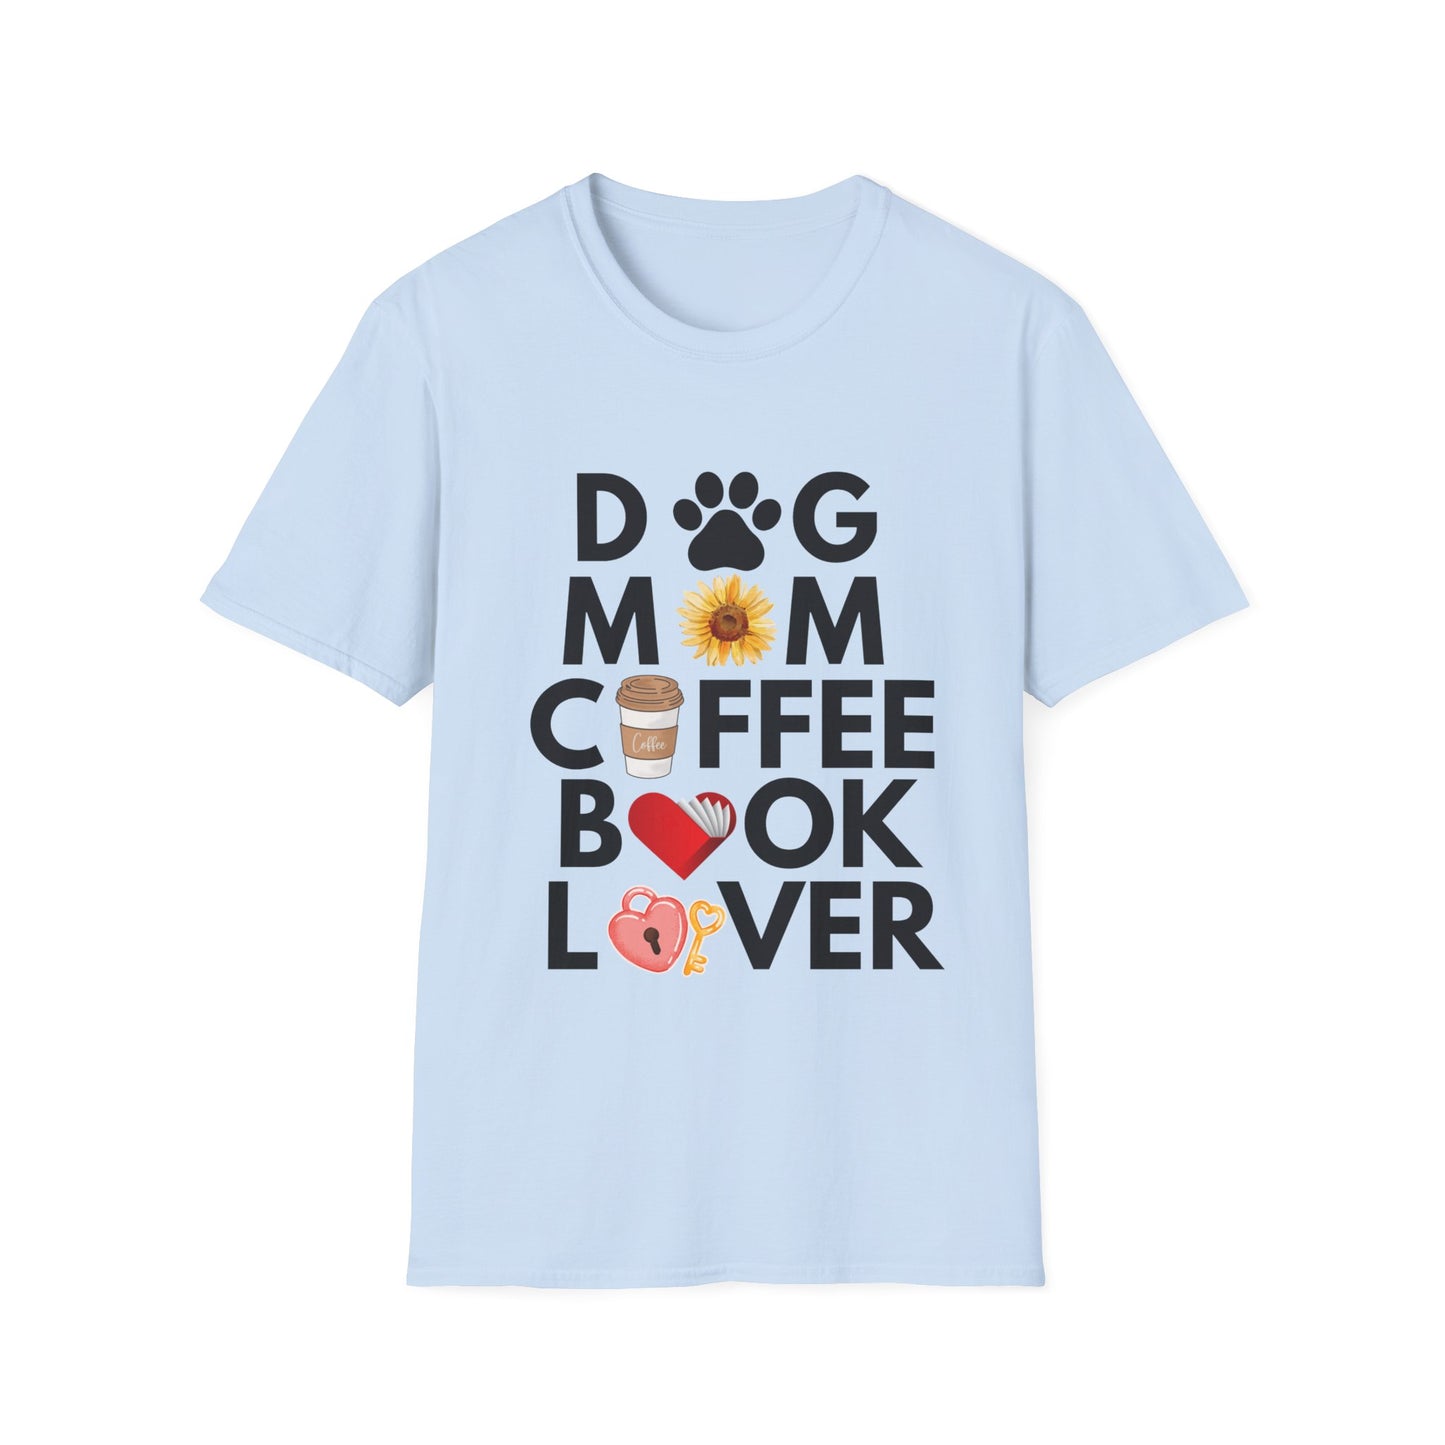 Dog Mom Coffee Book Lover T-Shirt